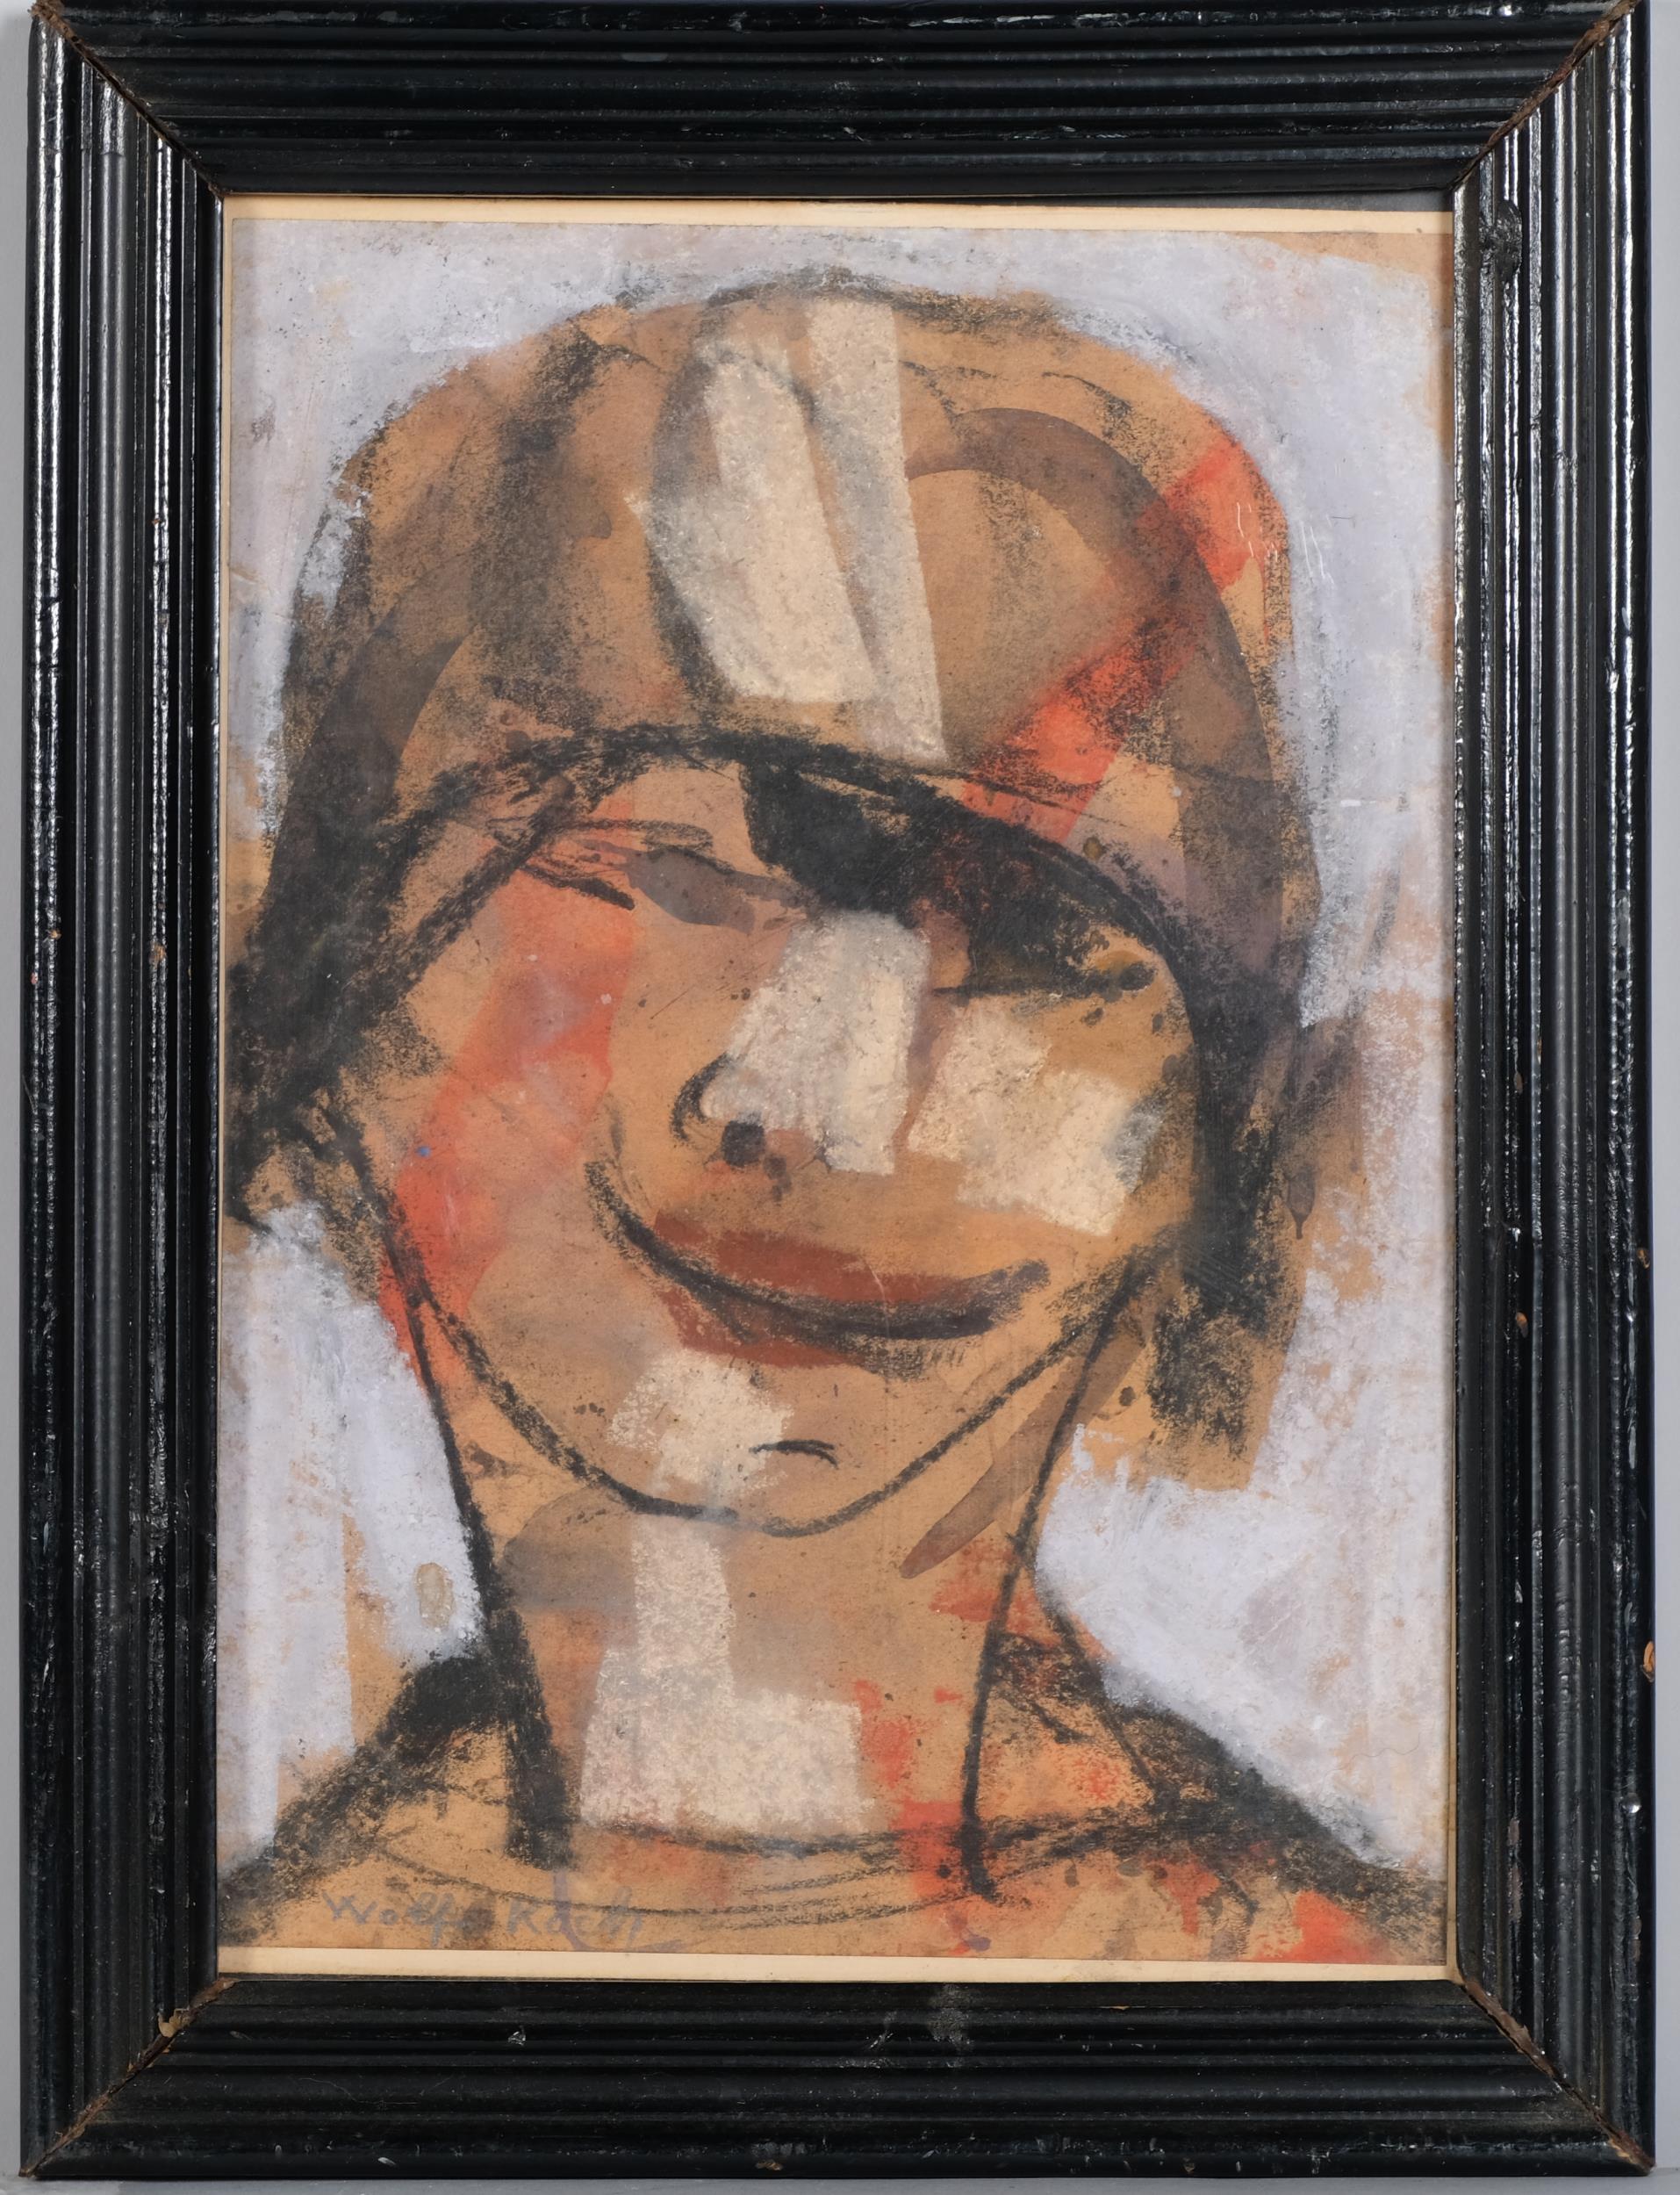 Lotte Wolf-Koch (1909 - 1977), self portrait, watercolour/crayon, signed, 28cm x 21cm, framed